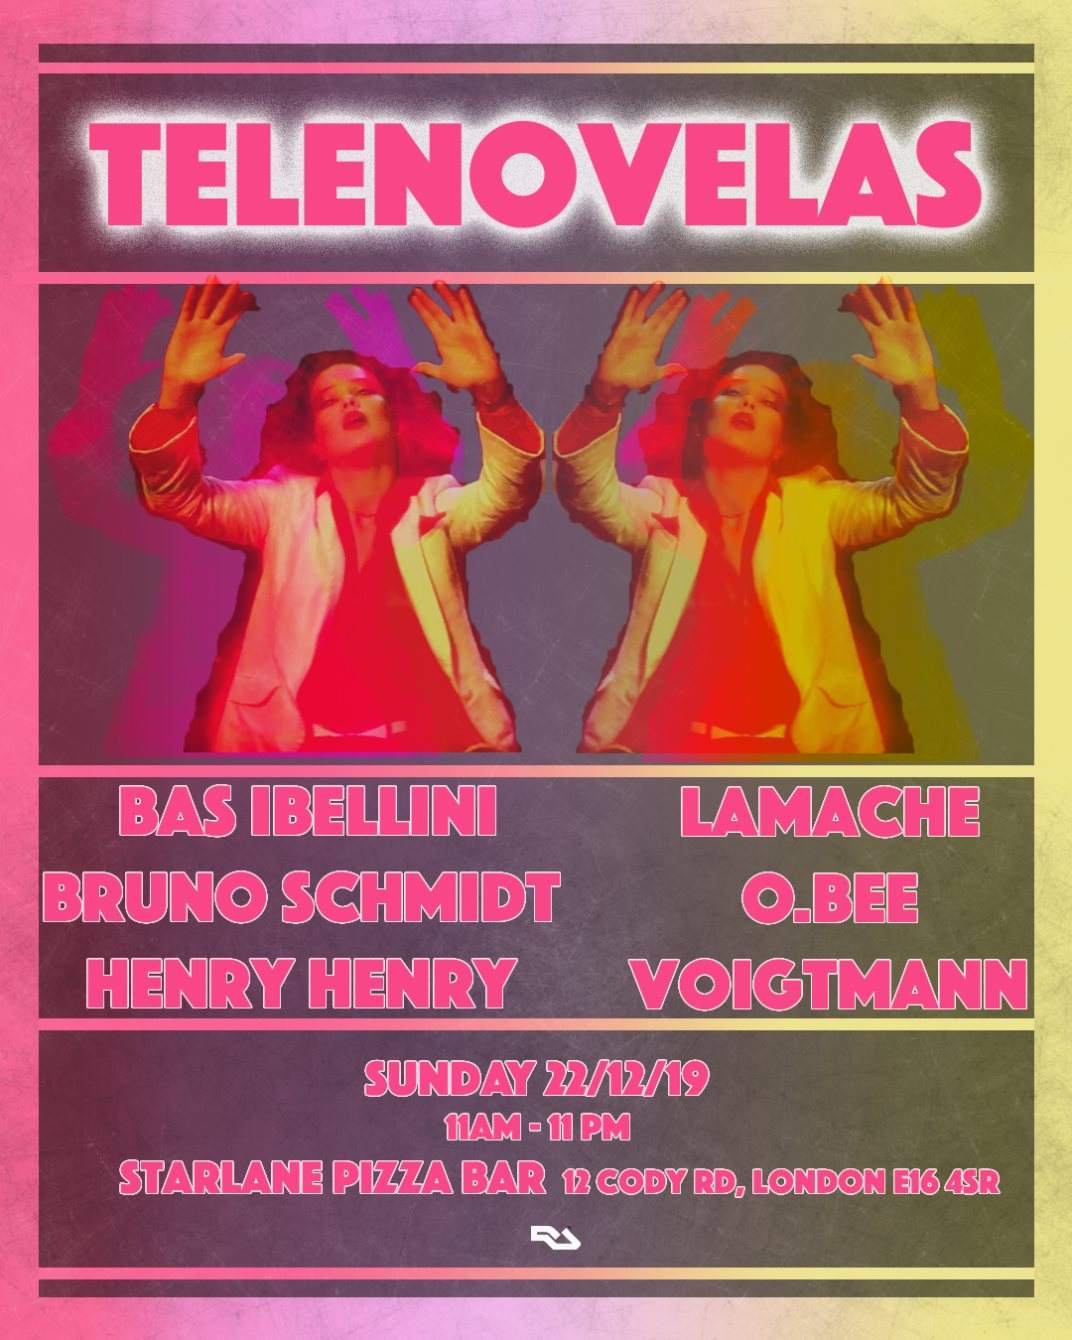 Telenovelas presents: Voigtmann, Lamache, Bruno Schmidt, O.BEE, Henry Henry & More - Flyer front